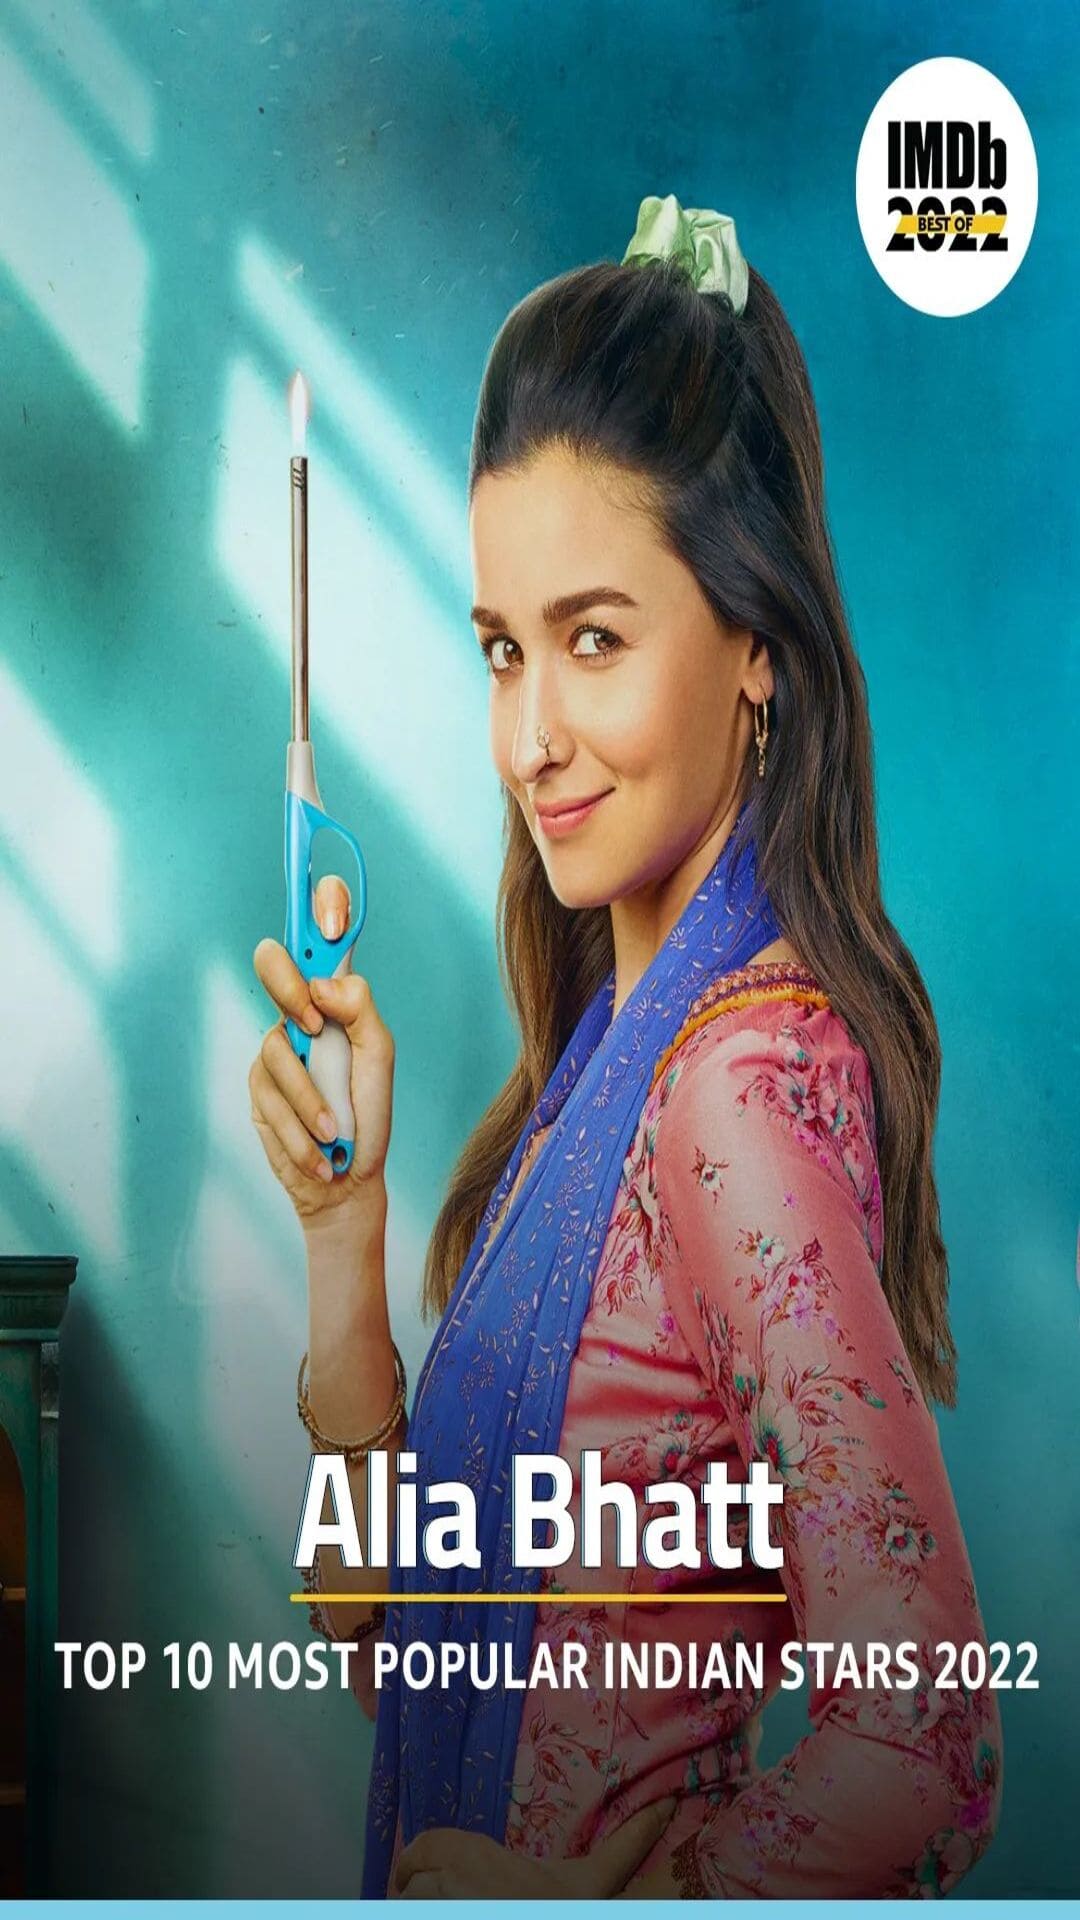 Dhanush And Alia Bhatt, The Most Popular Stars Of 2022